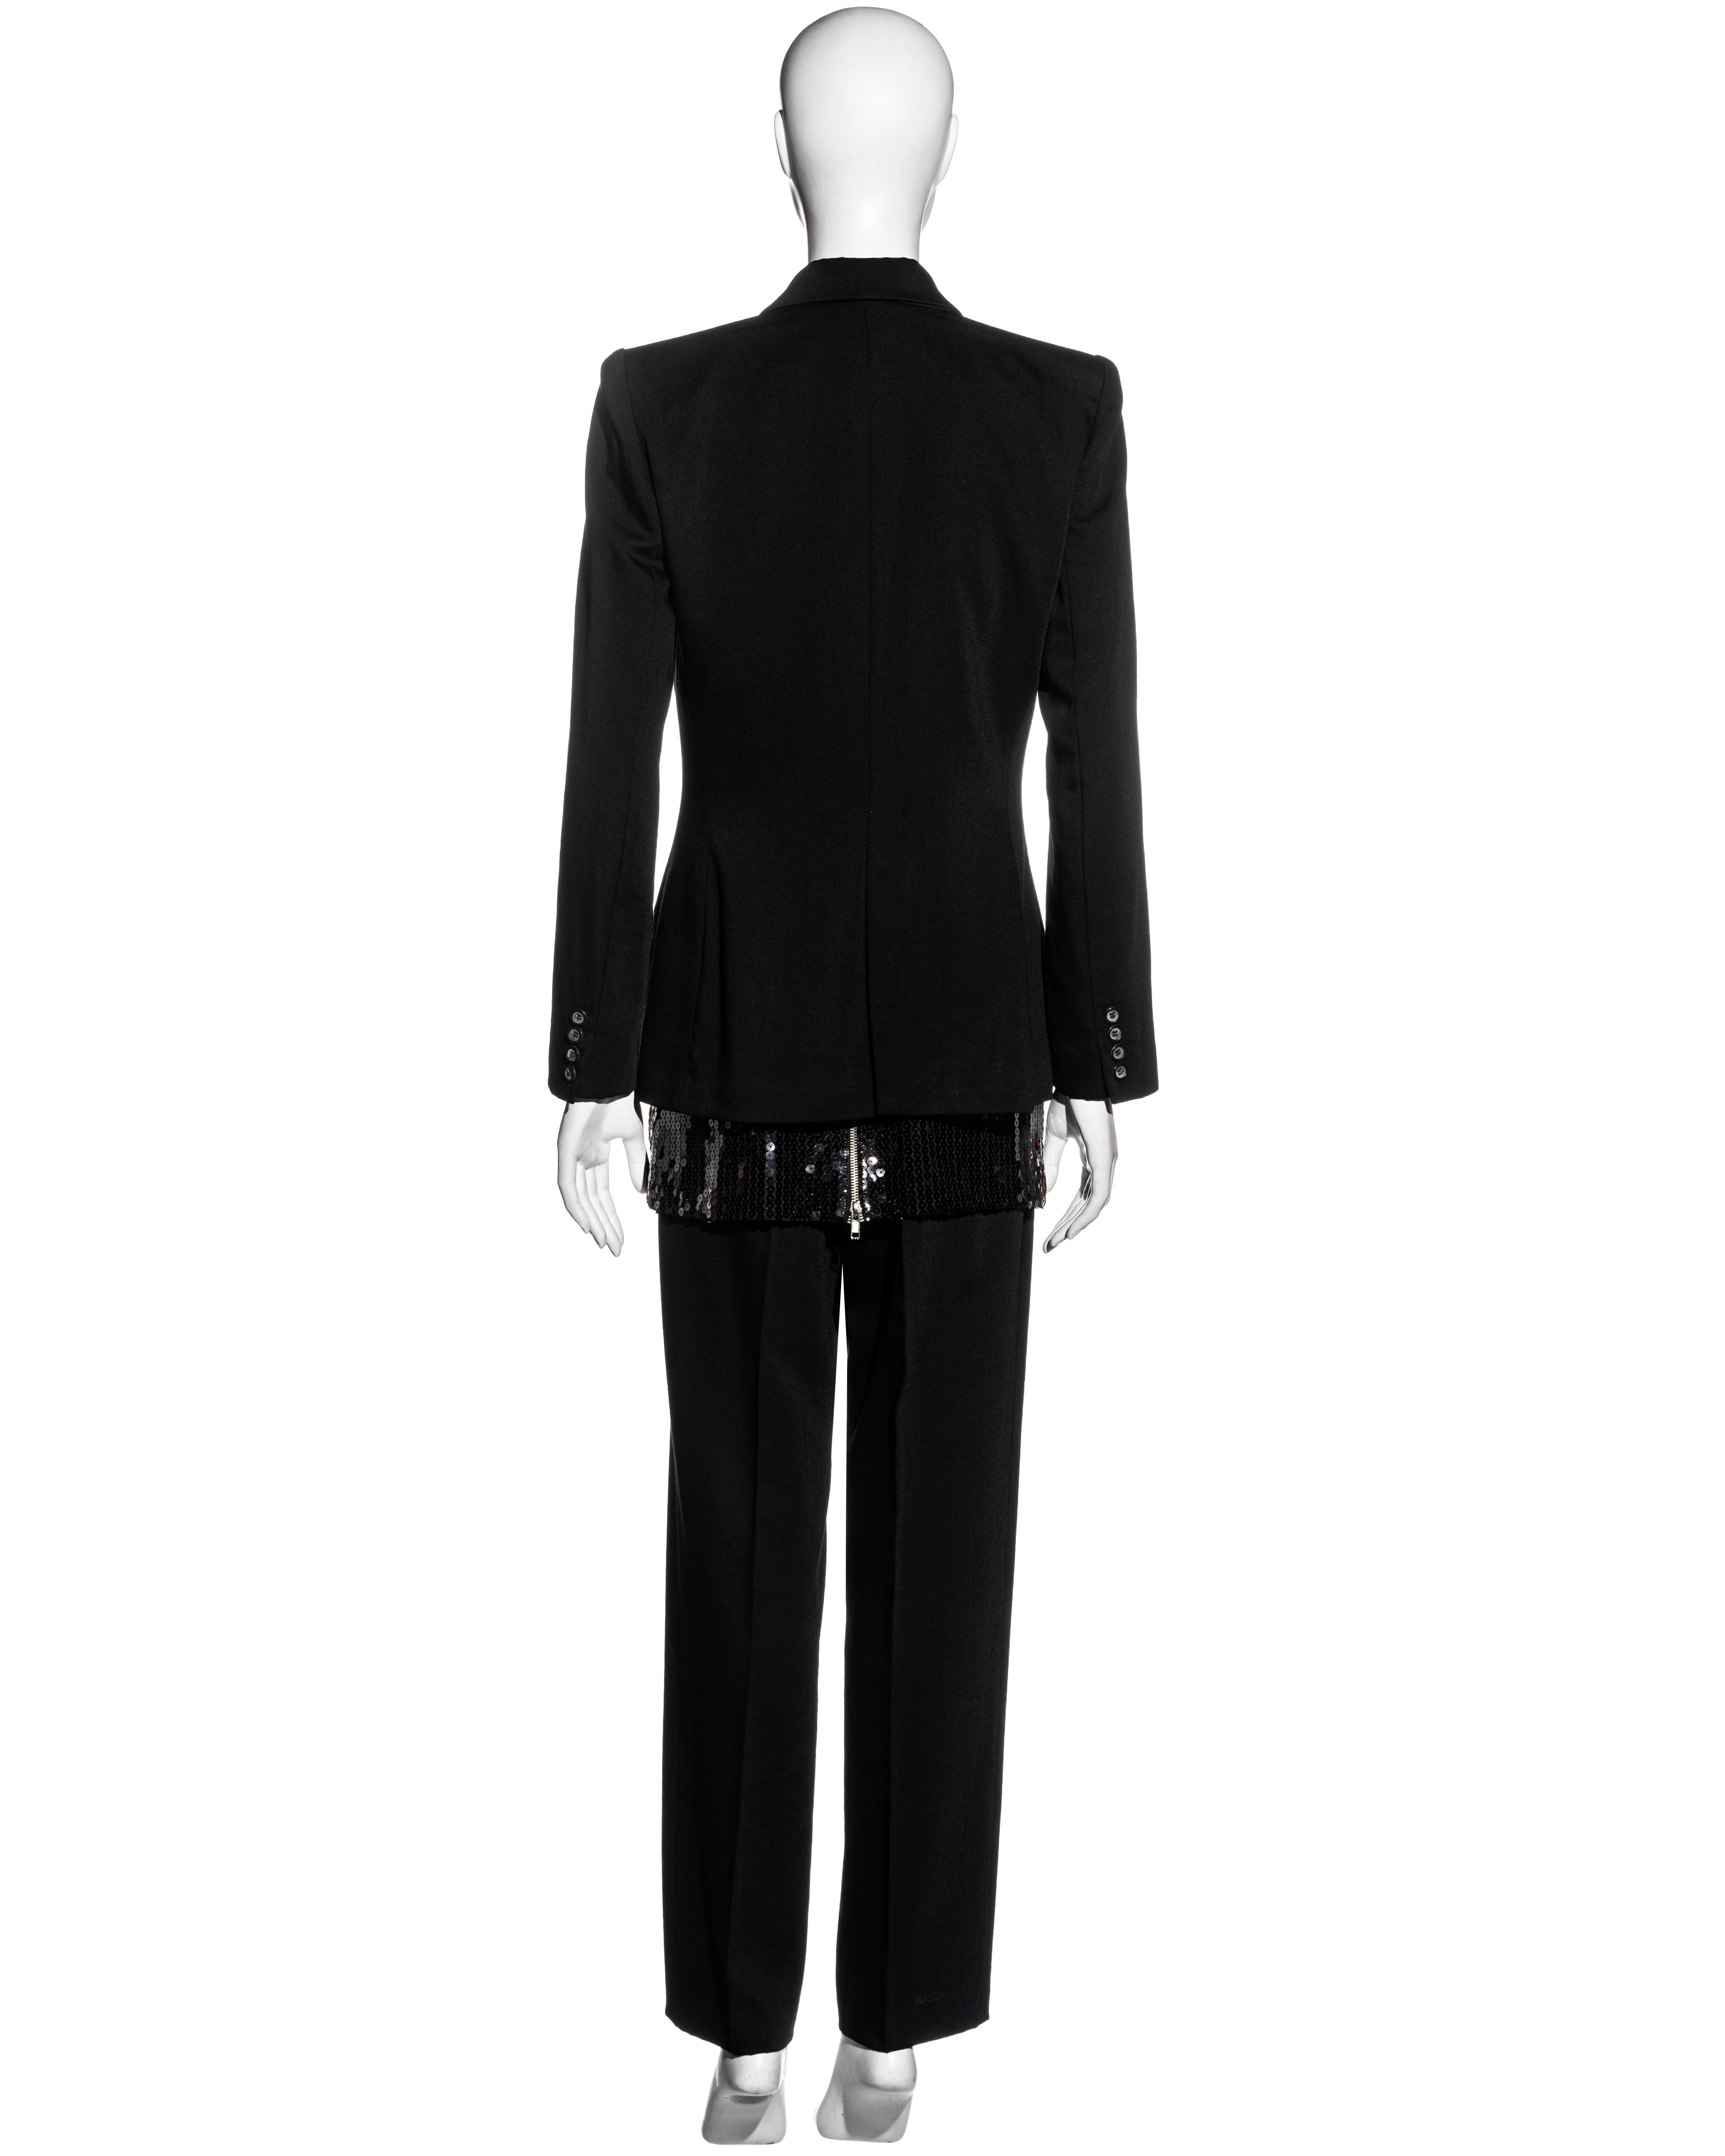 Alexander McQueen black wool and sequin four-piece 'Joan' suit, fw 1998 For Sale 6